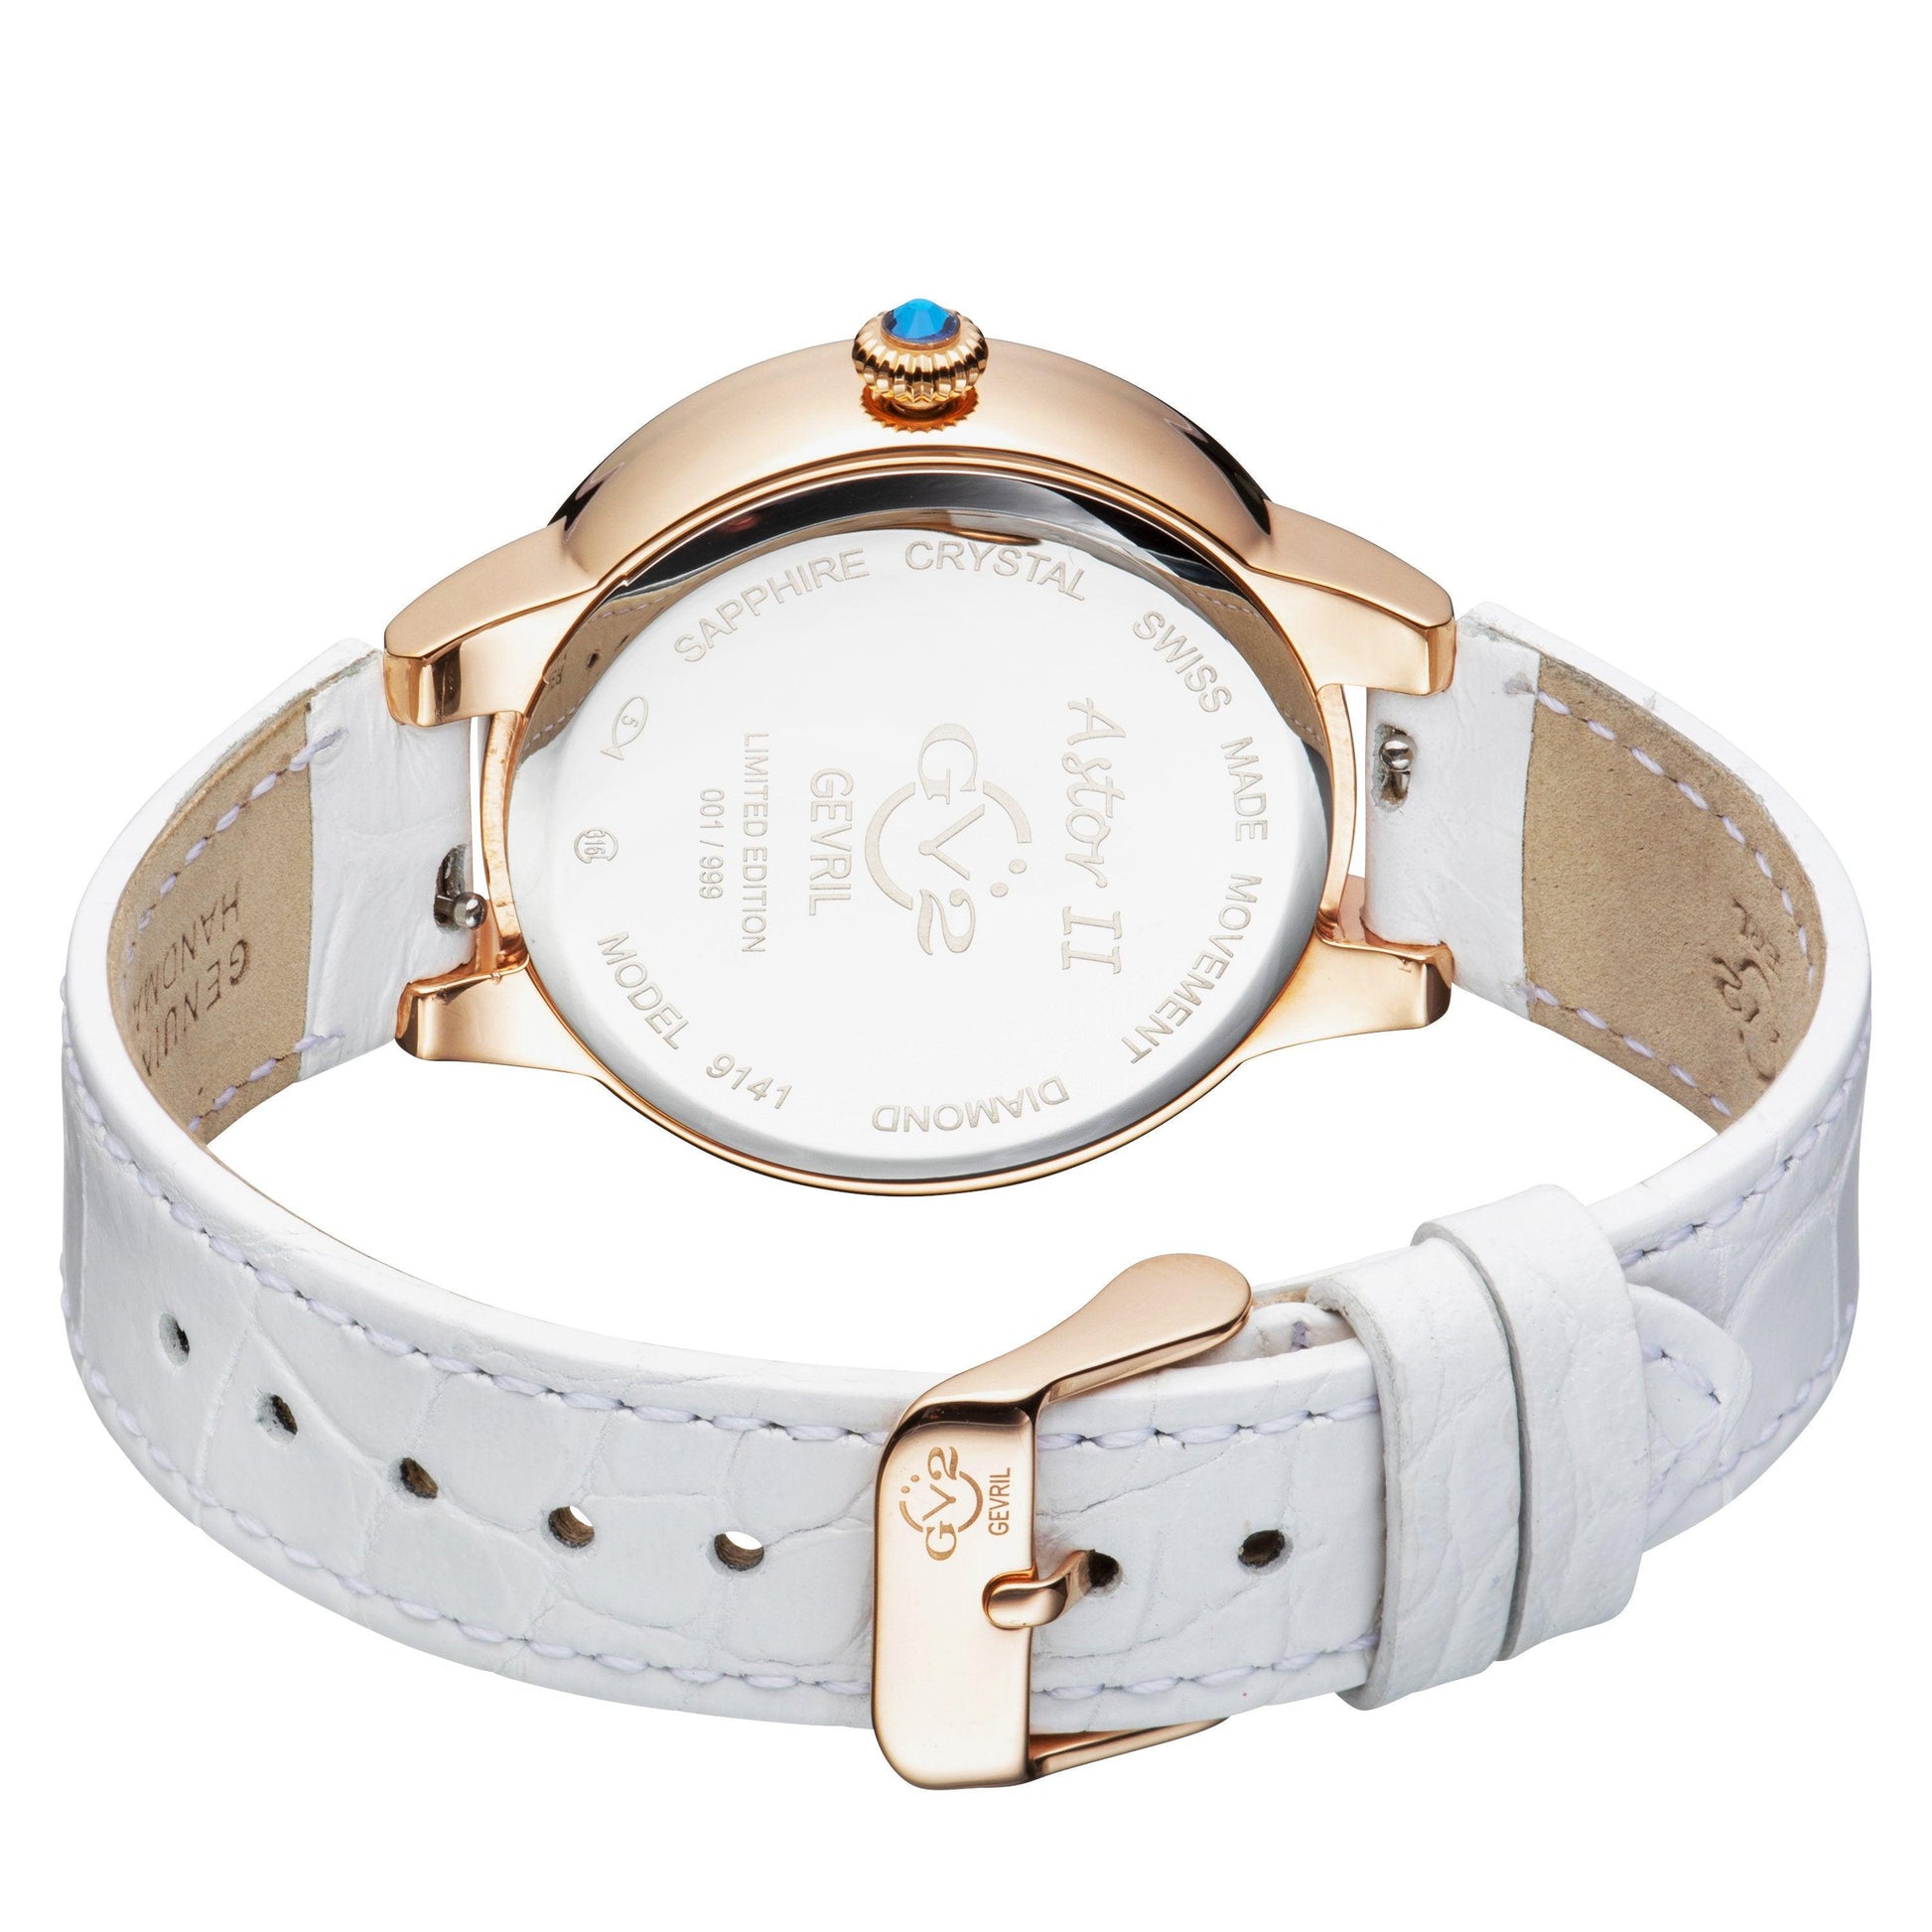 Gevril-Luxury-Swiss-Watches-GV2 Astor II Diamond-9141-L2